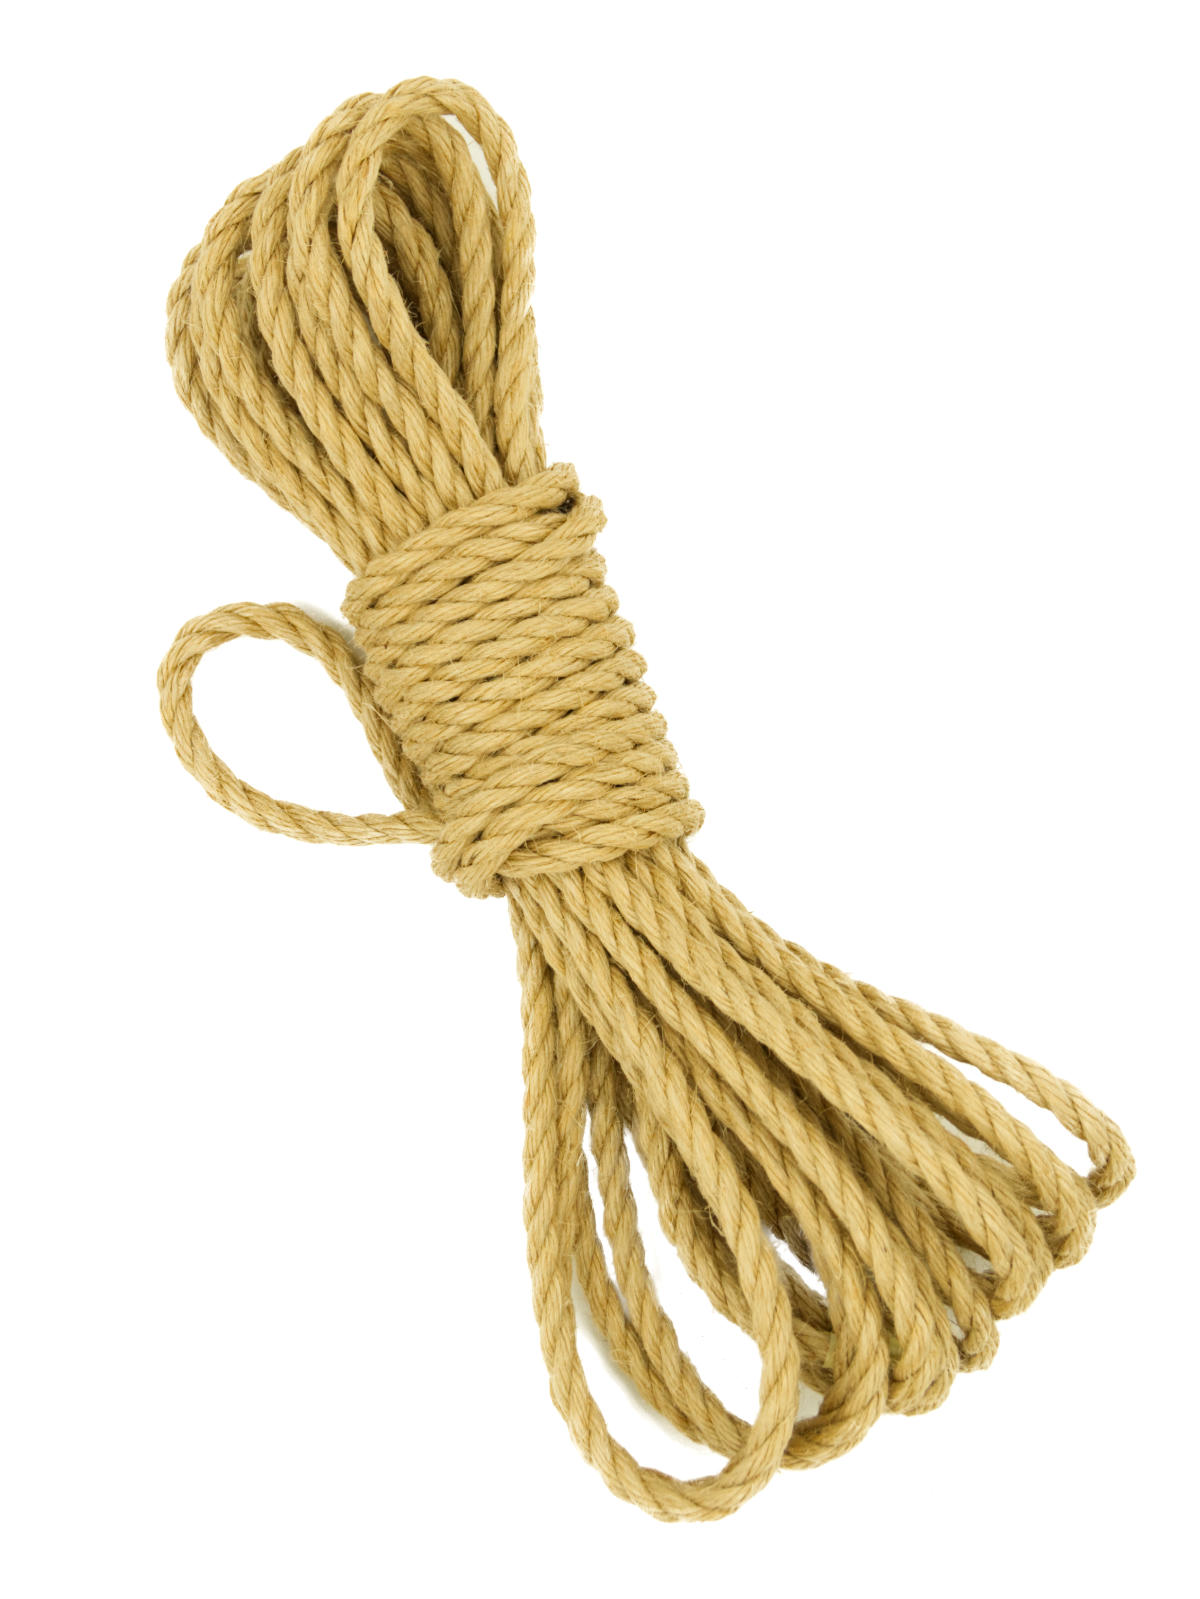 ø 5.5mm RAW Jouyoku jute rope for Shibari, Kinbaku bondage, various lengths